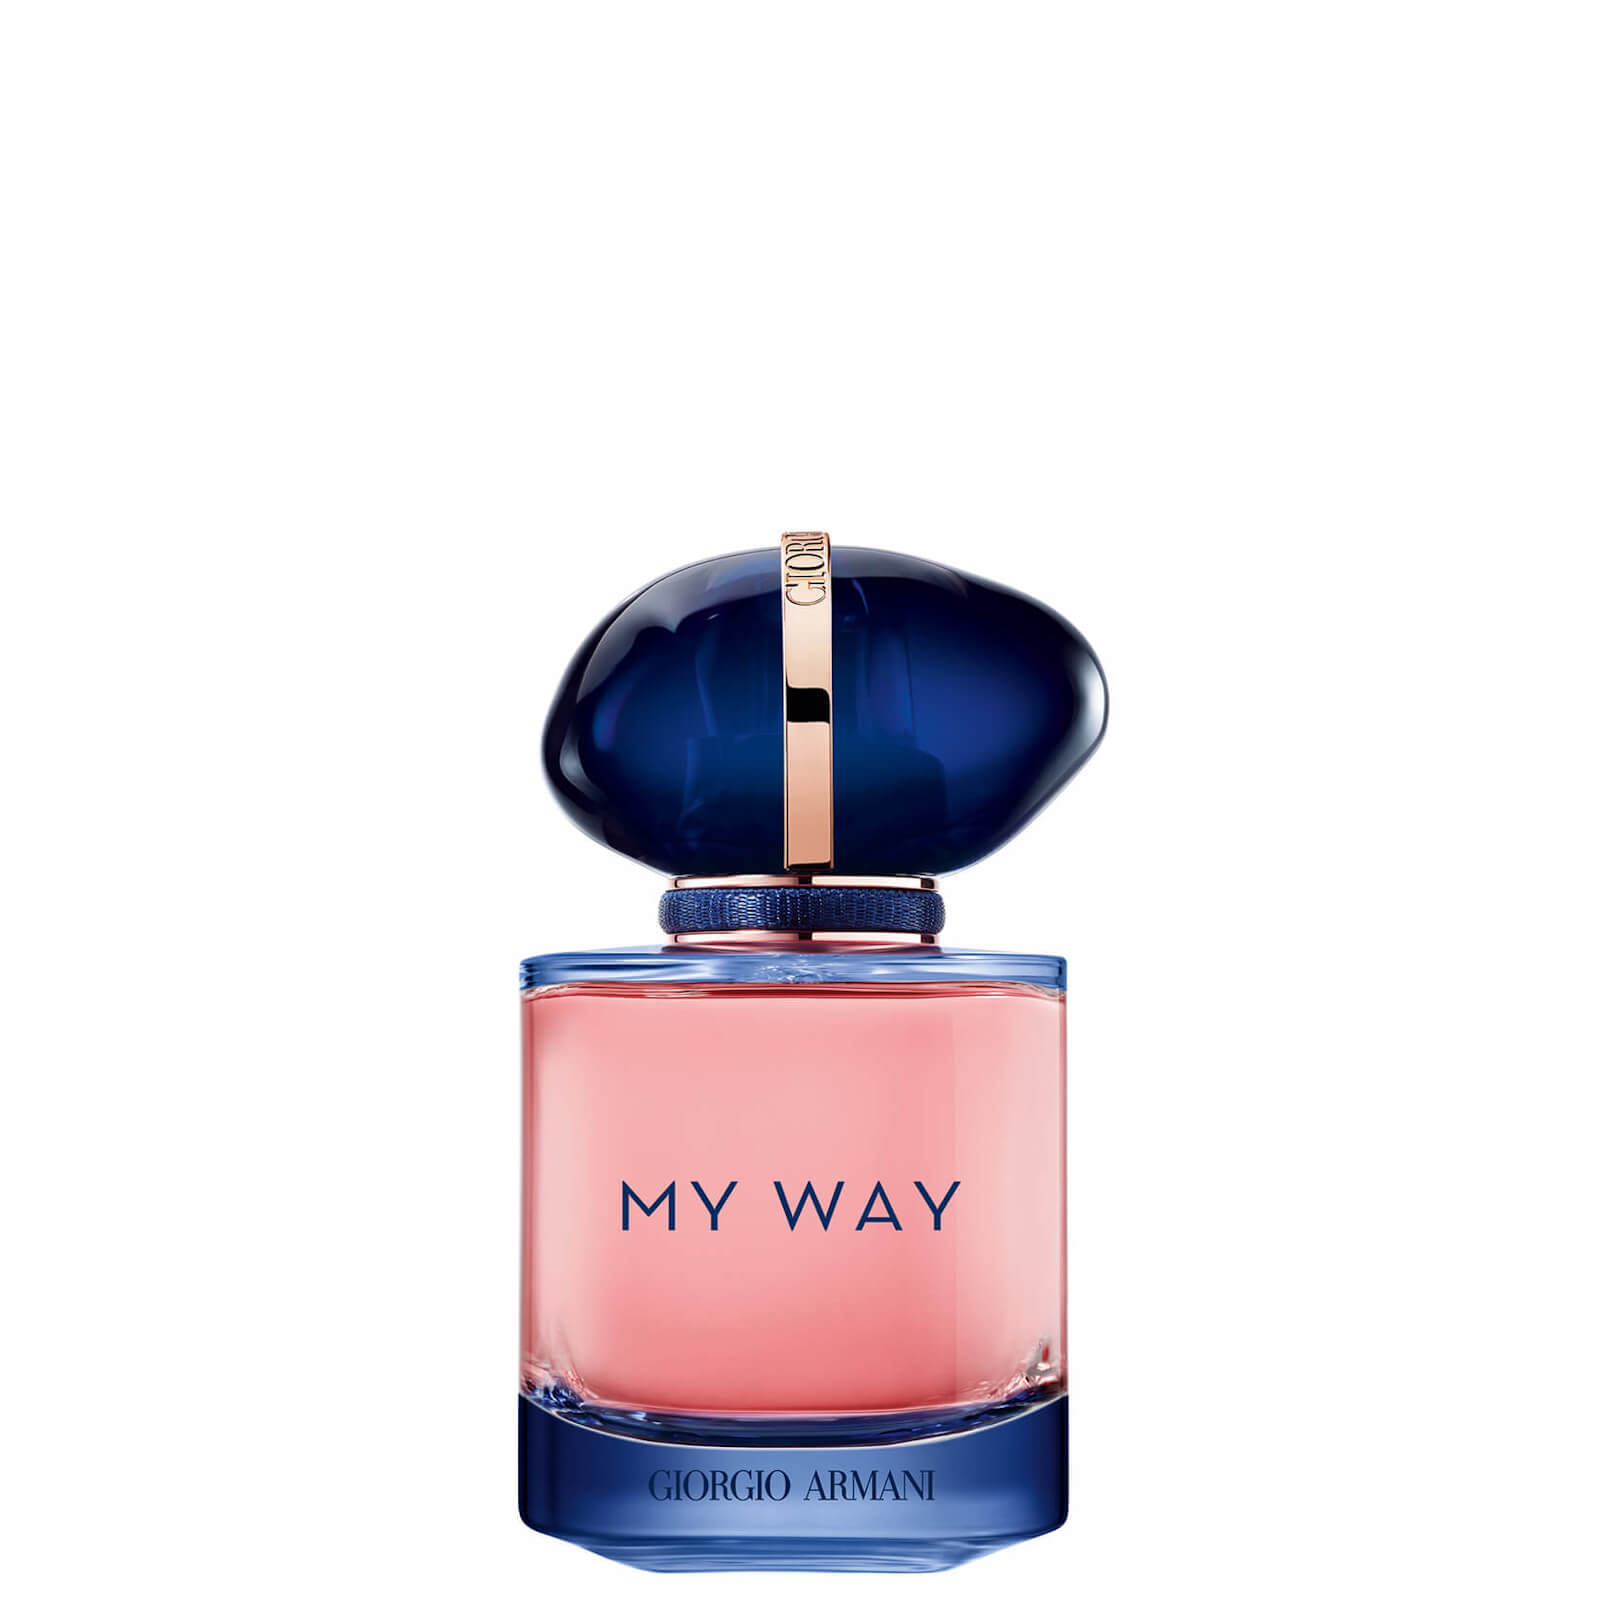 Image of Armani My Way Eau de Parfum Profumo Intense - 30ml